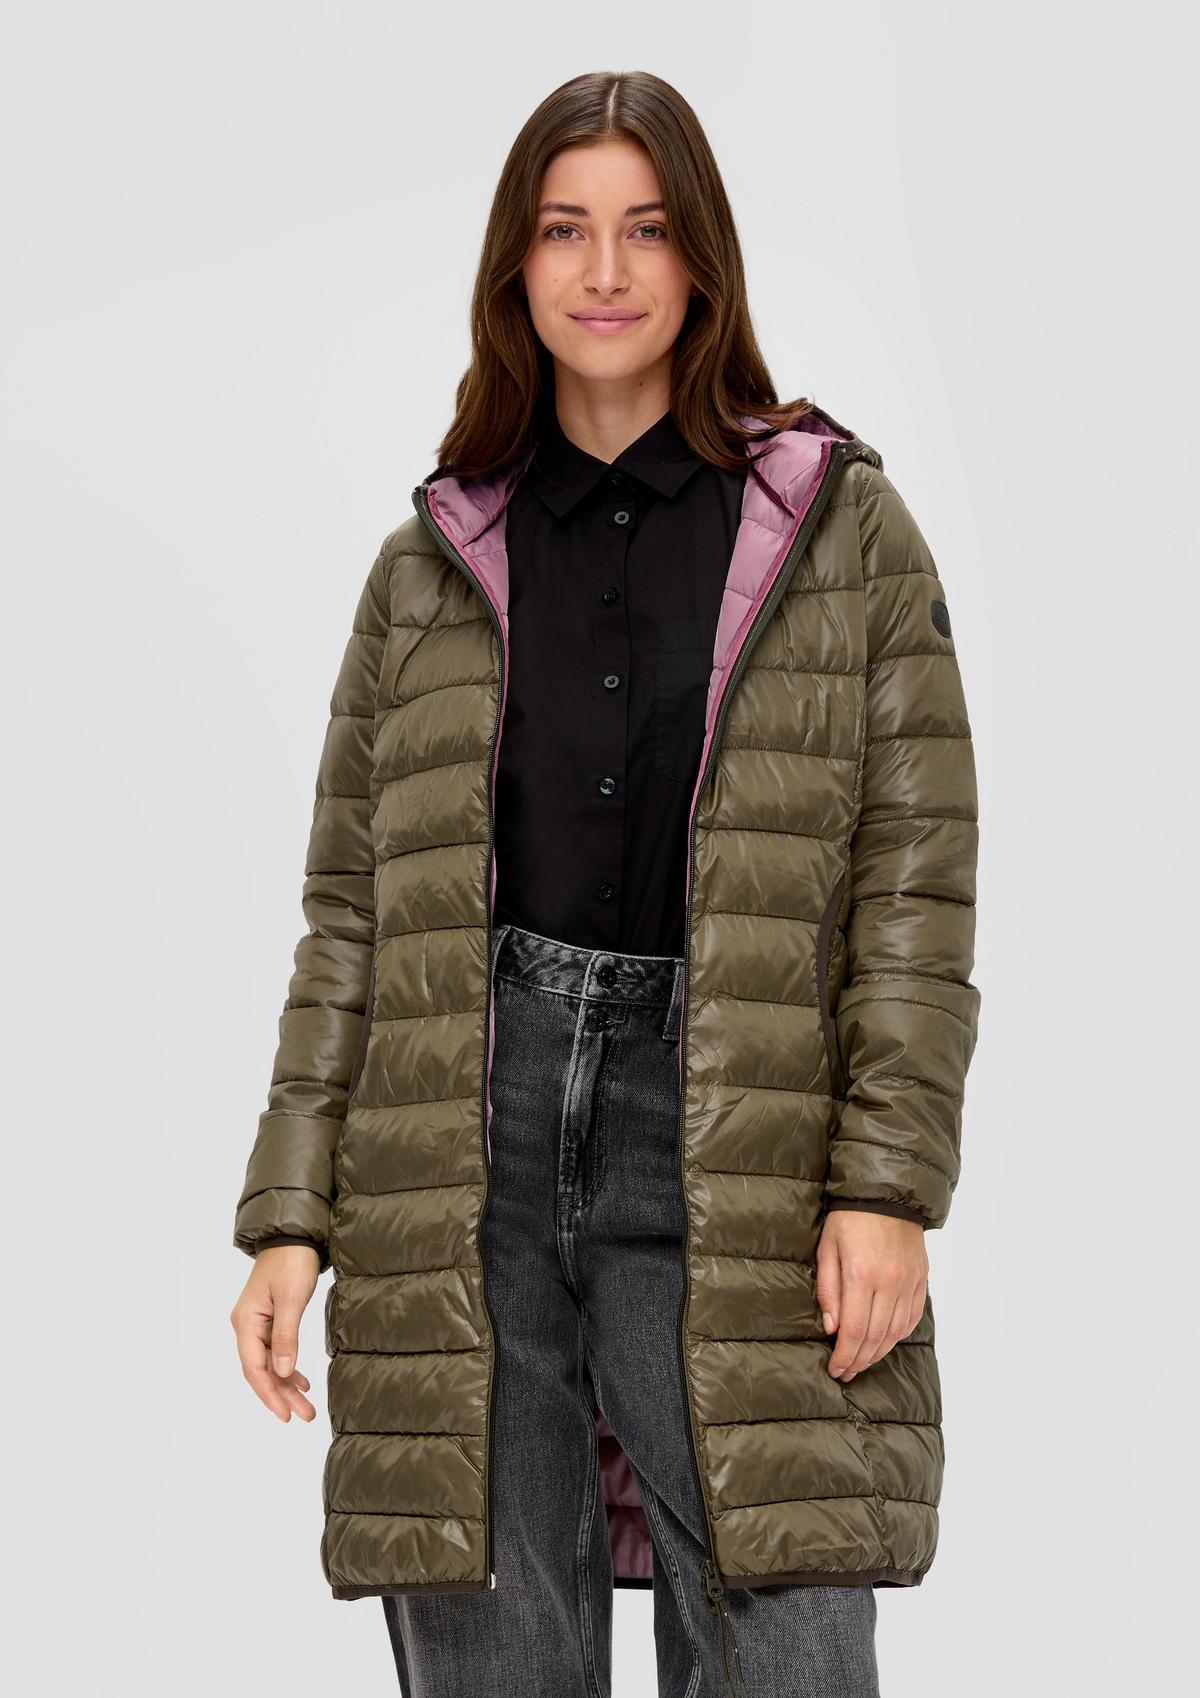 SALE: Jackets & Coats for Women